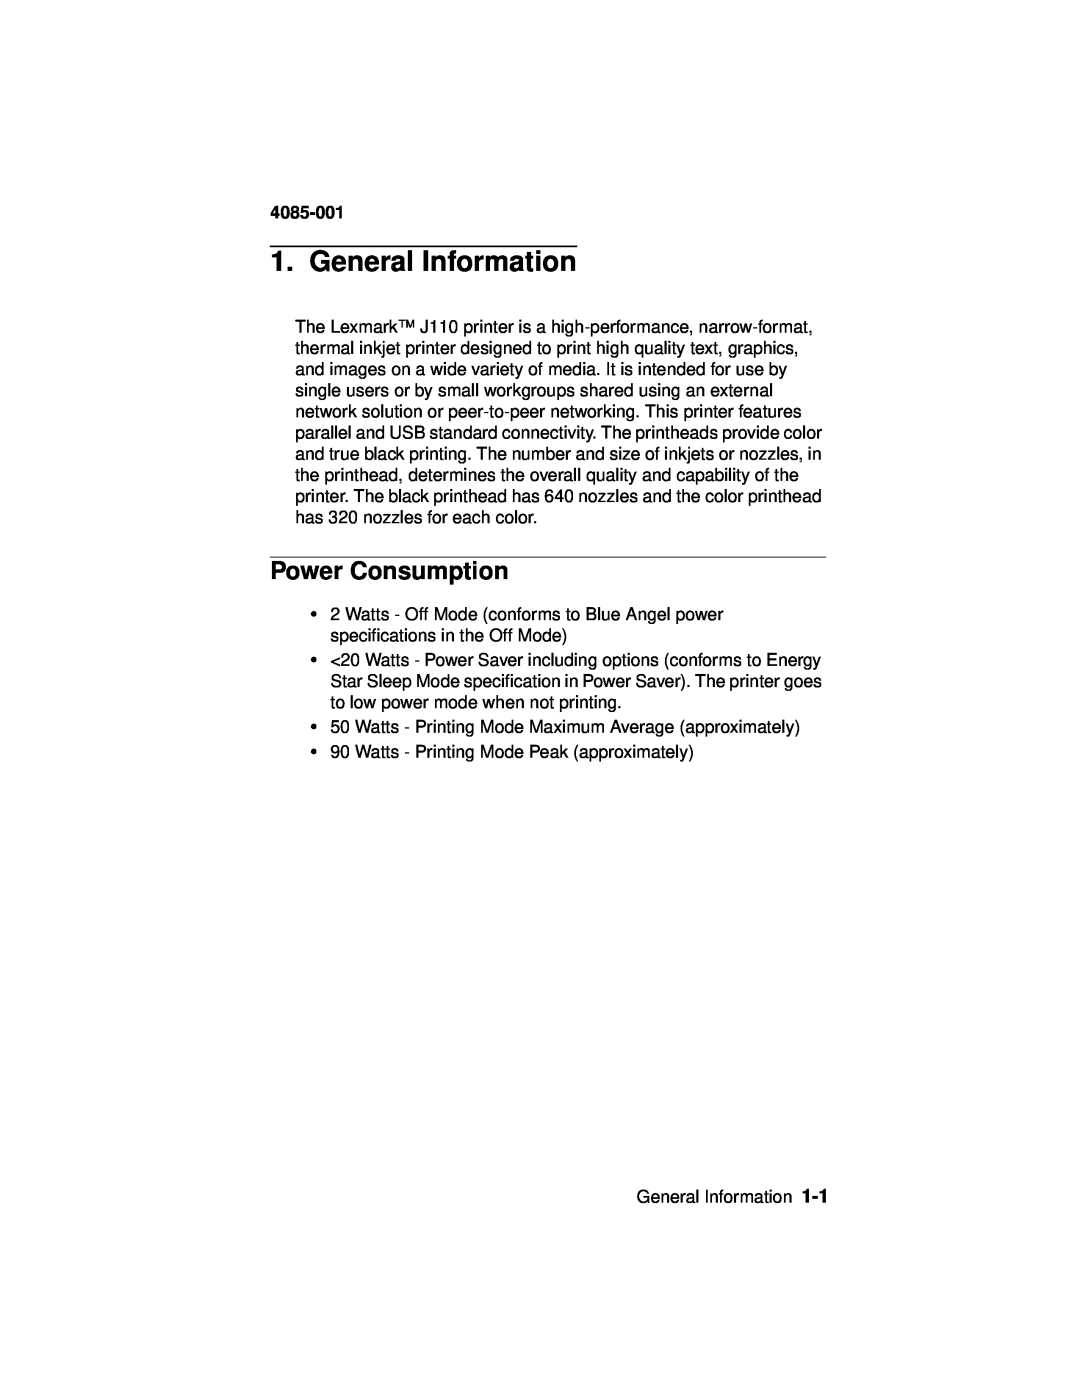 Lexmark Printer, J110 manual General Information, Power Consumption, 4085-001 